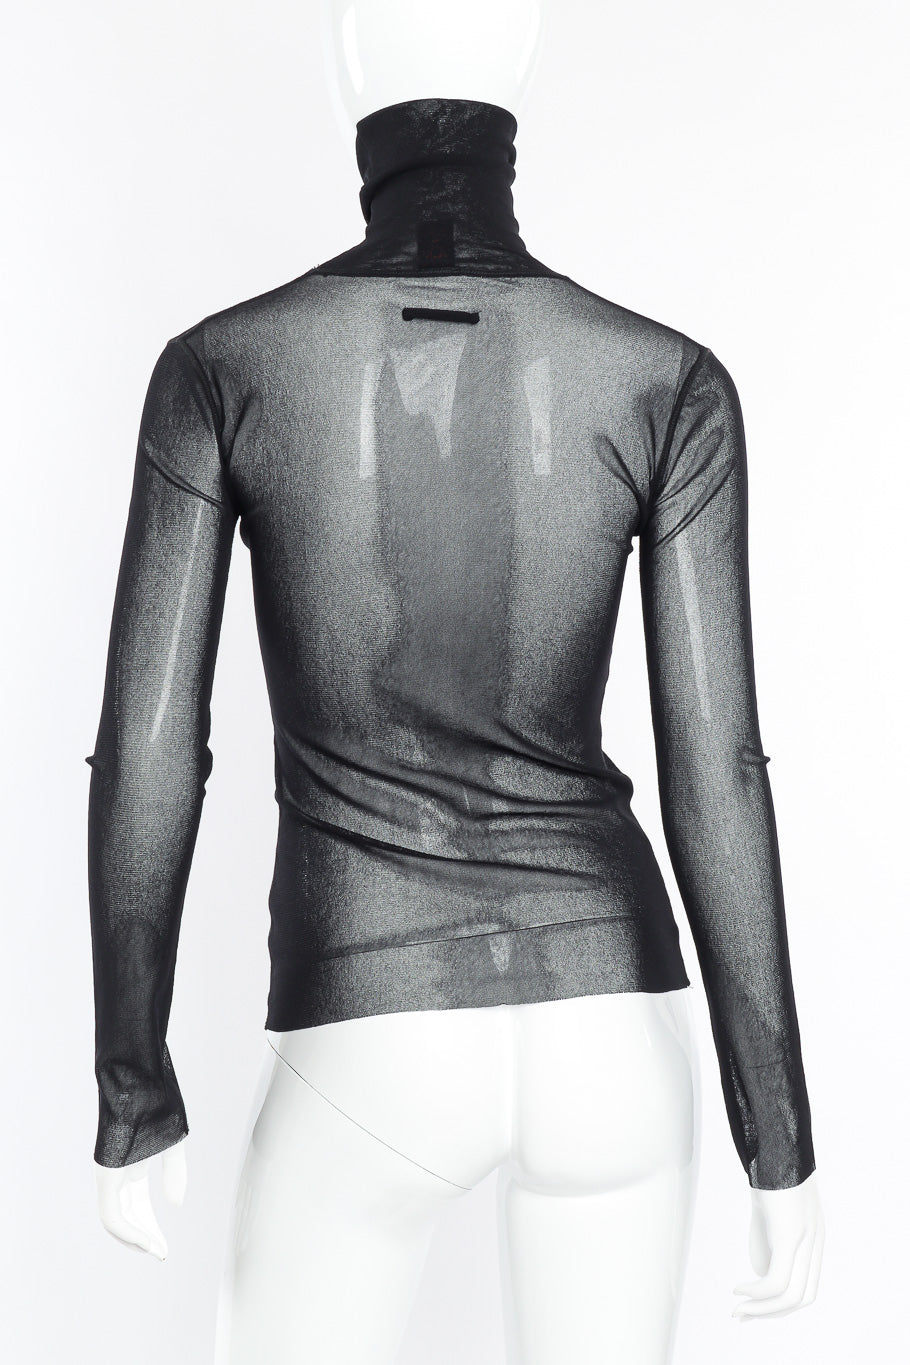 Vintage Jean Paul Gaultier Soleil Mesh Turtleneck back view on mannequin @Recessla